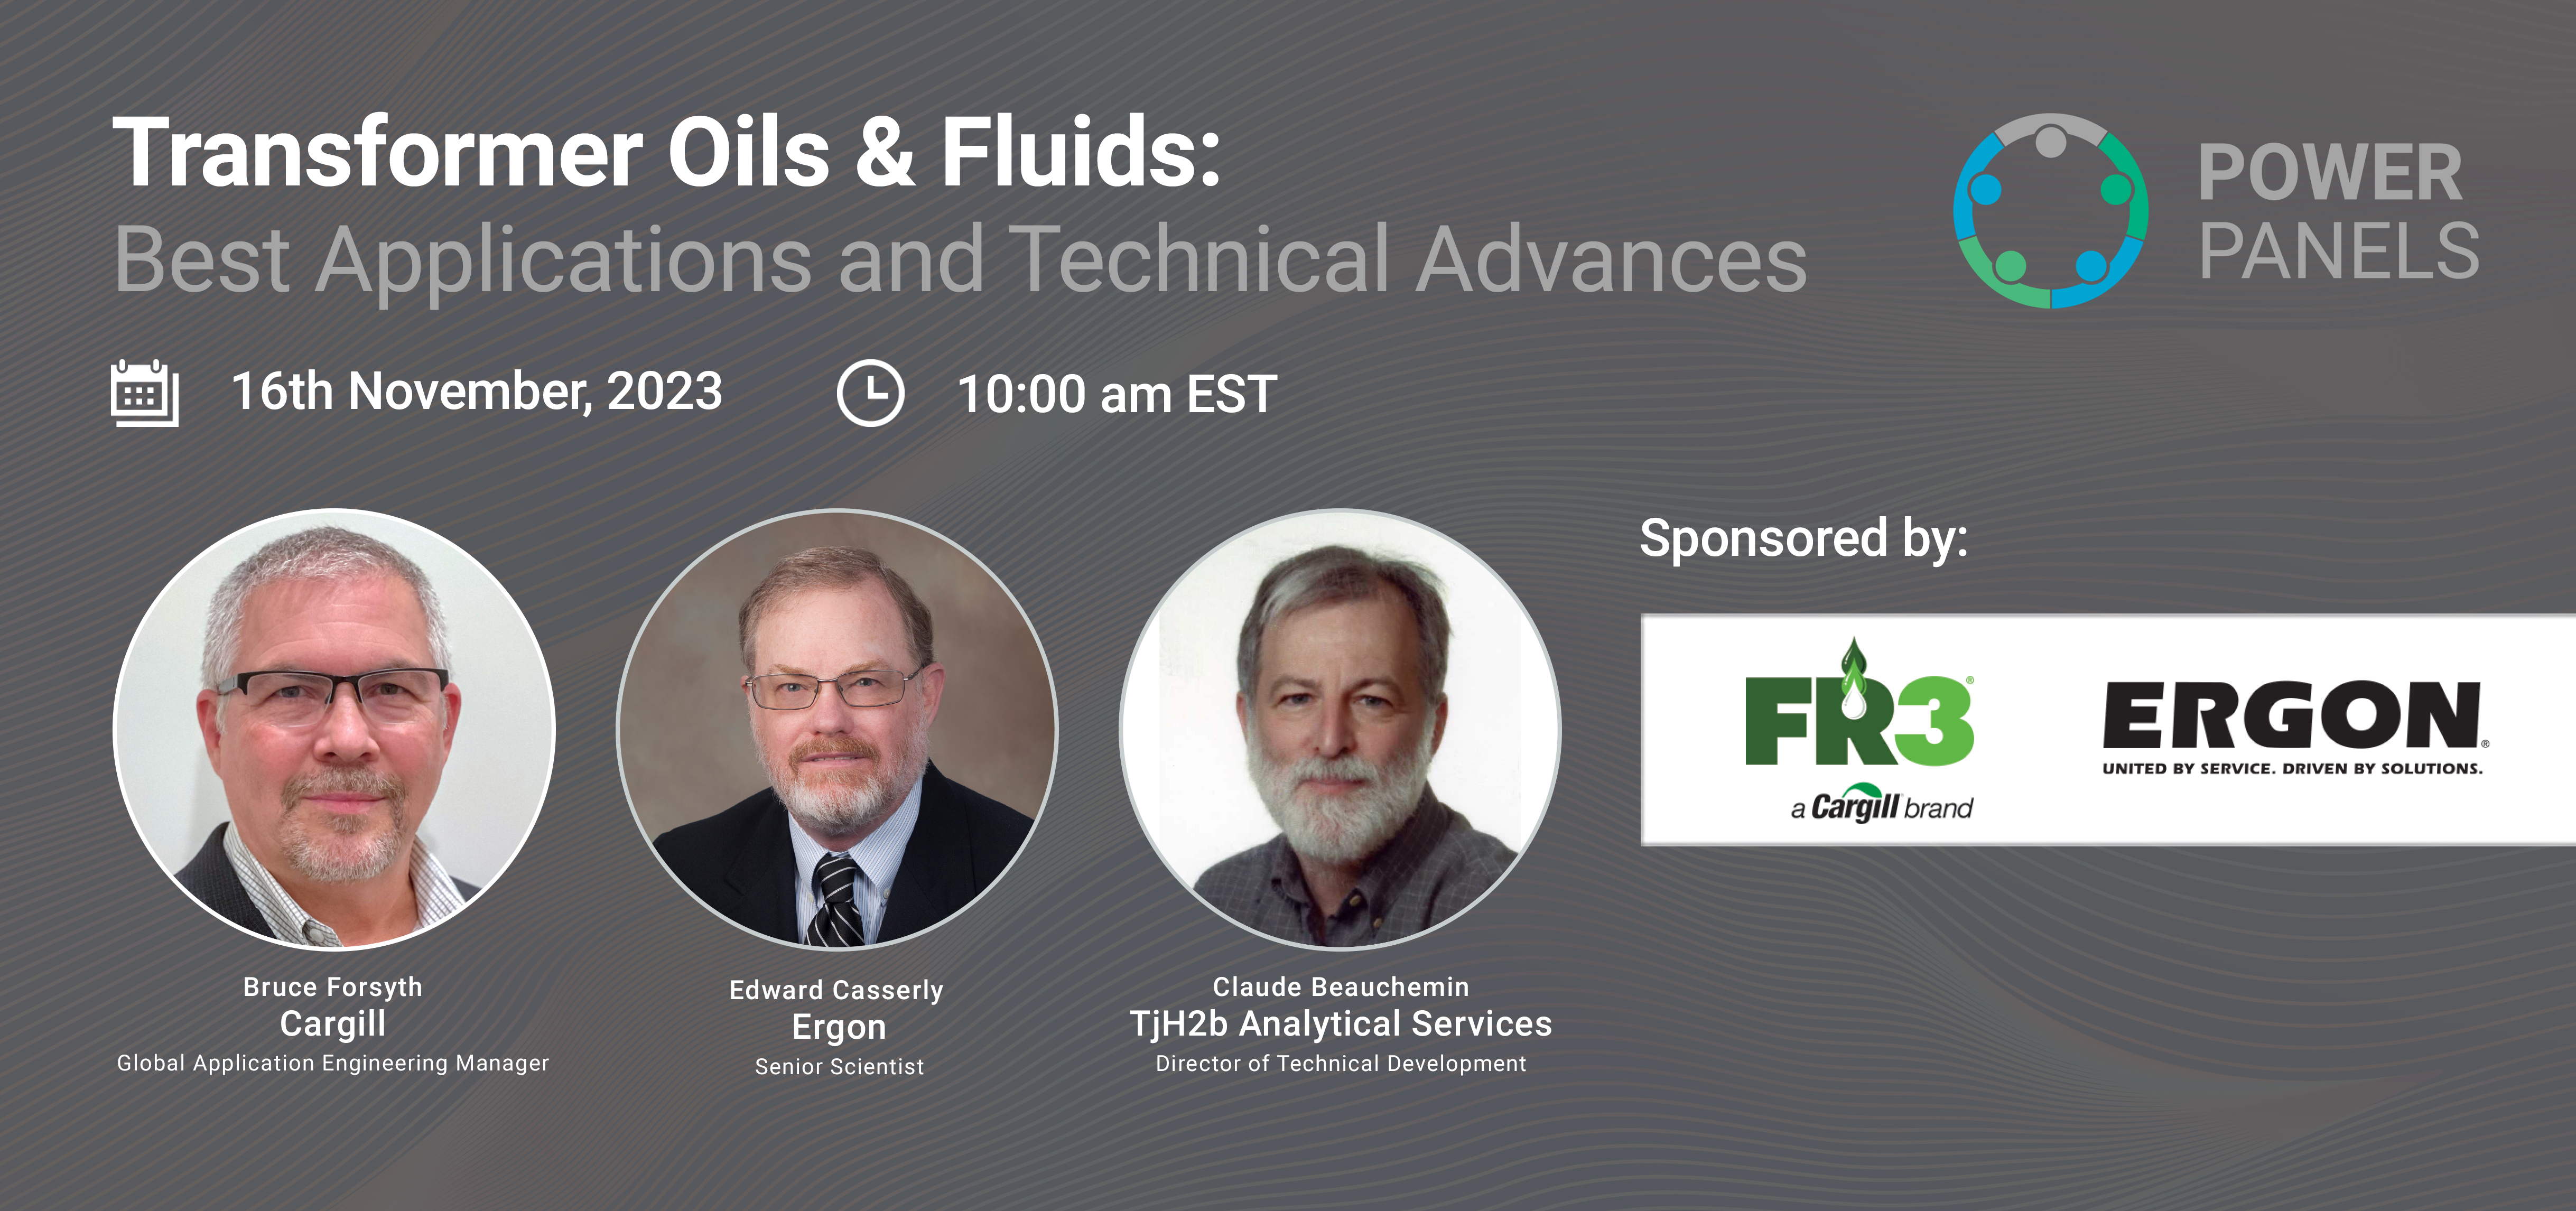 Power Panels Discussion: Transformer Oils & Fluids: Best Applications and Technical Advances 